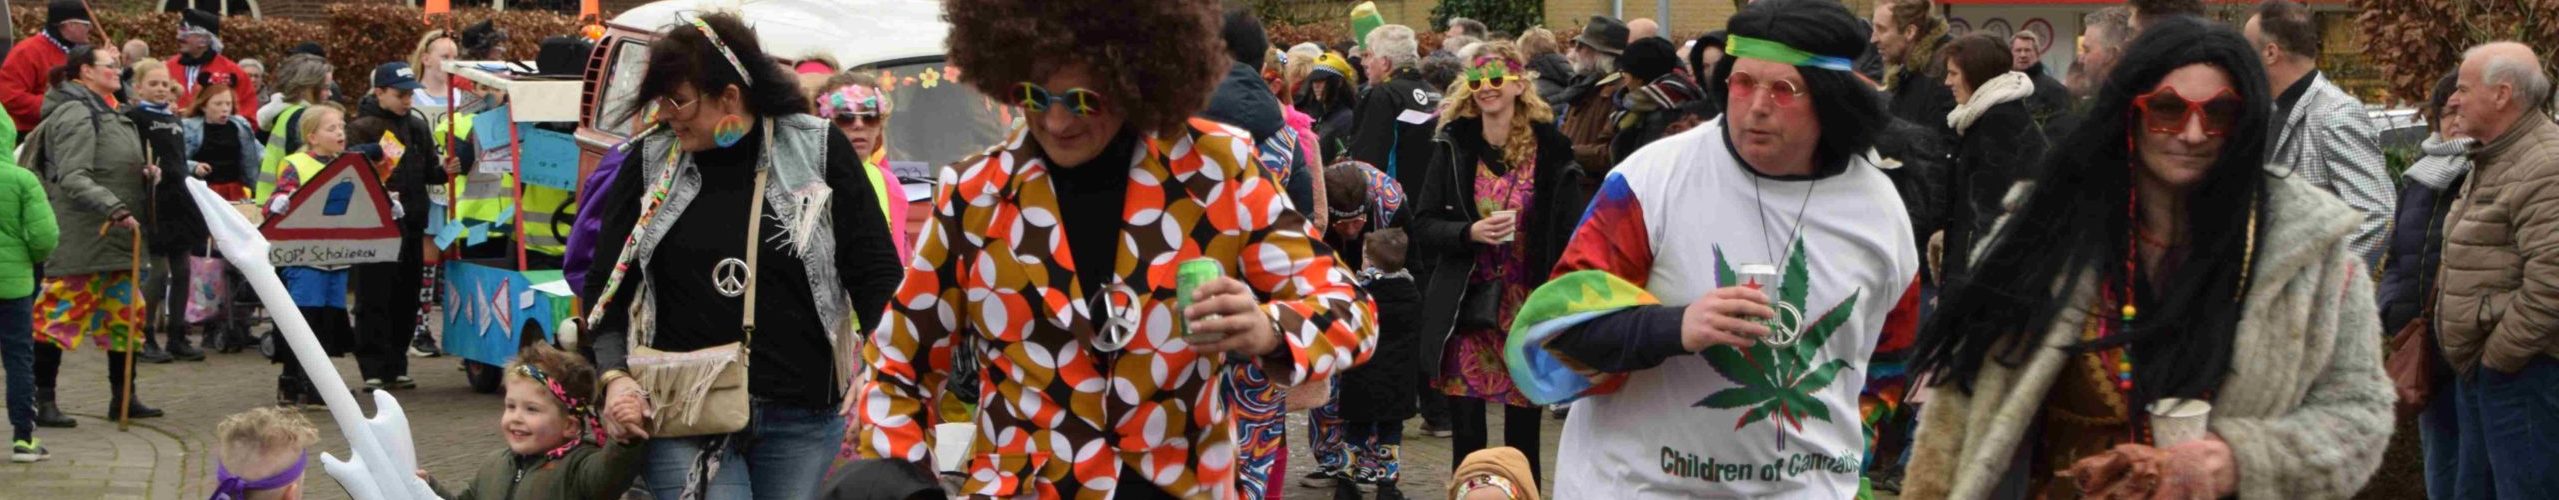 Carnaval in Doornenburg 